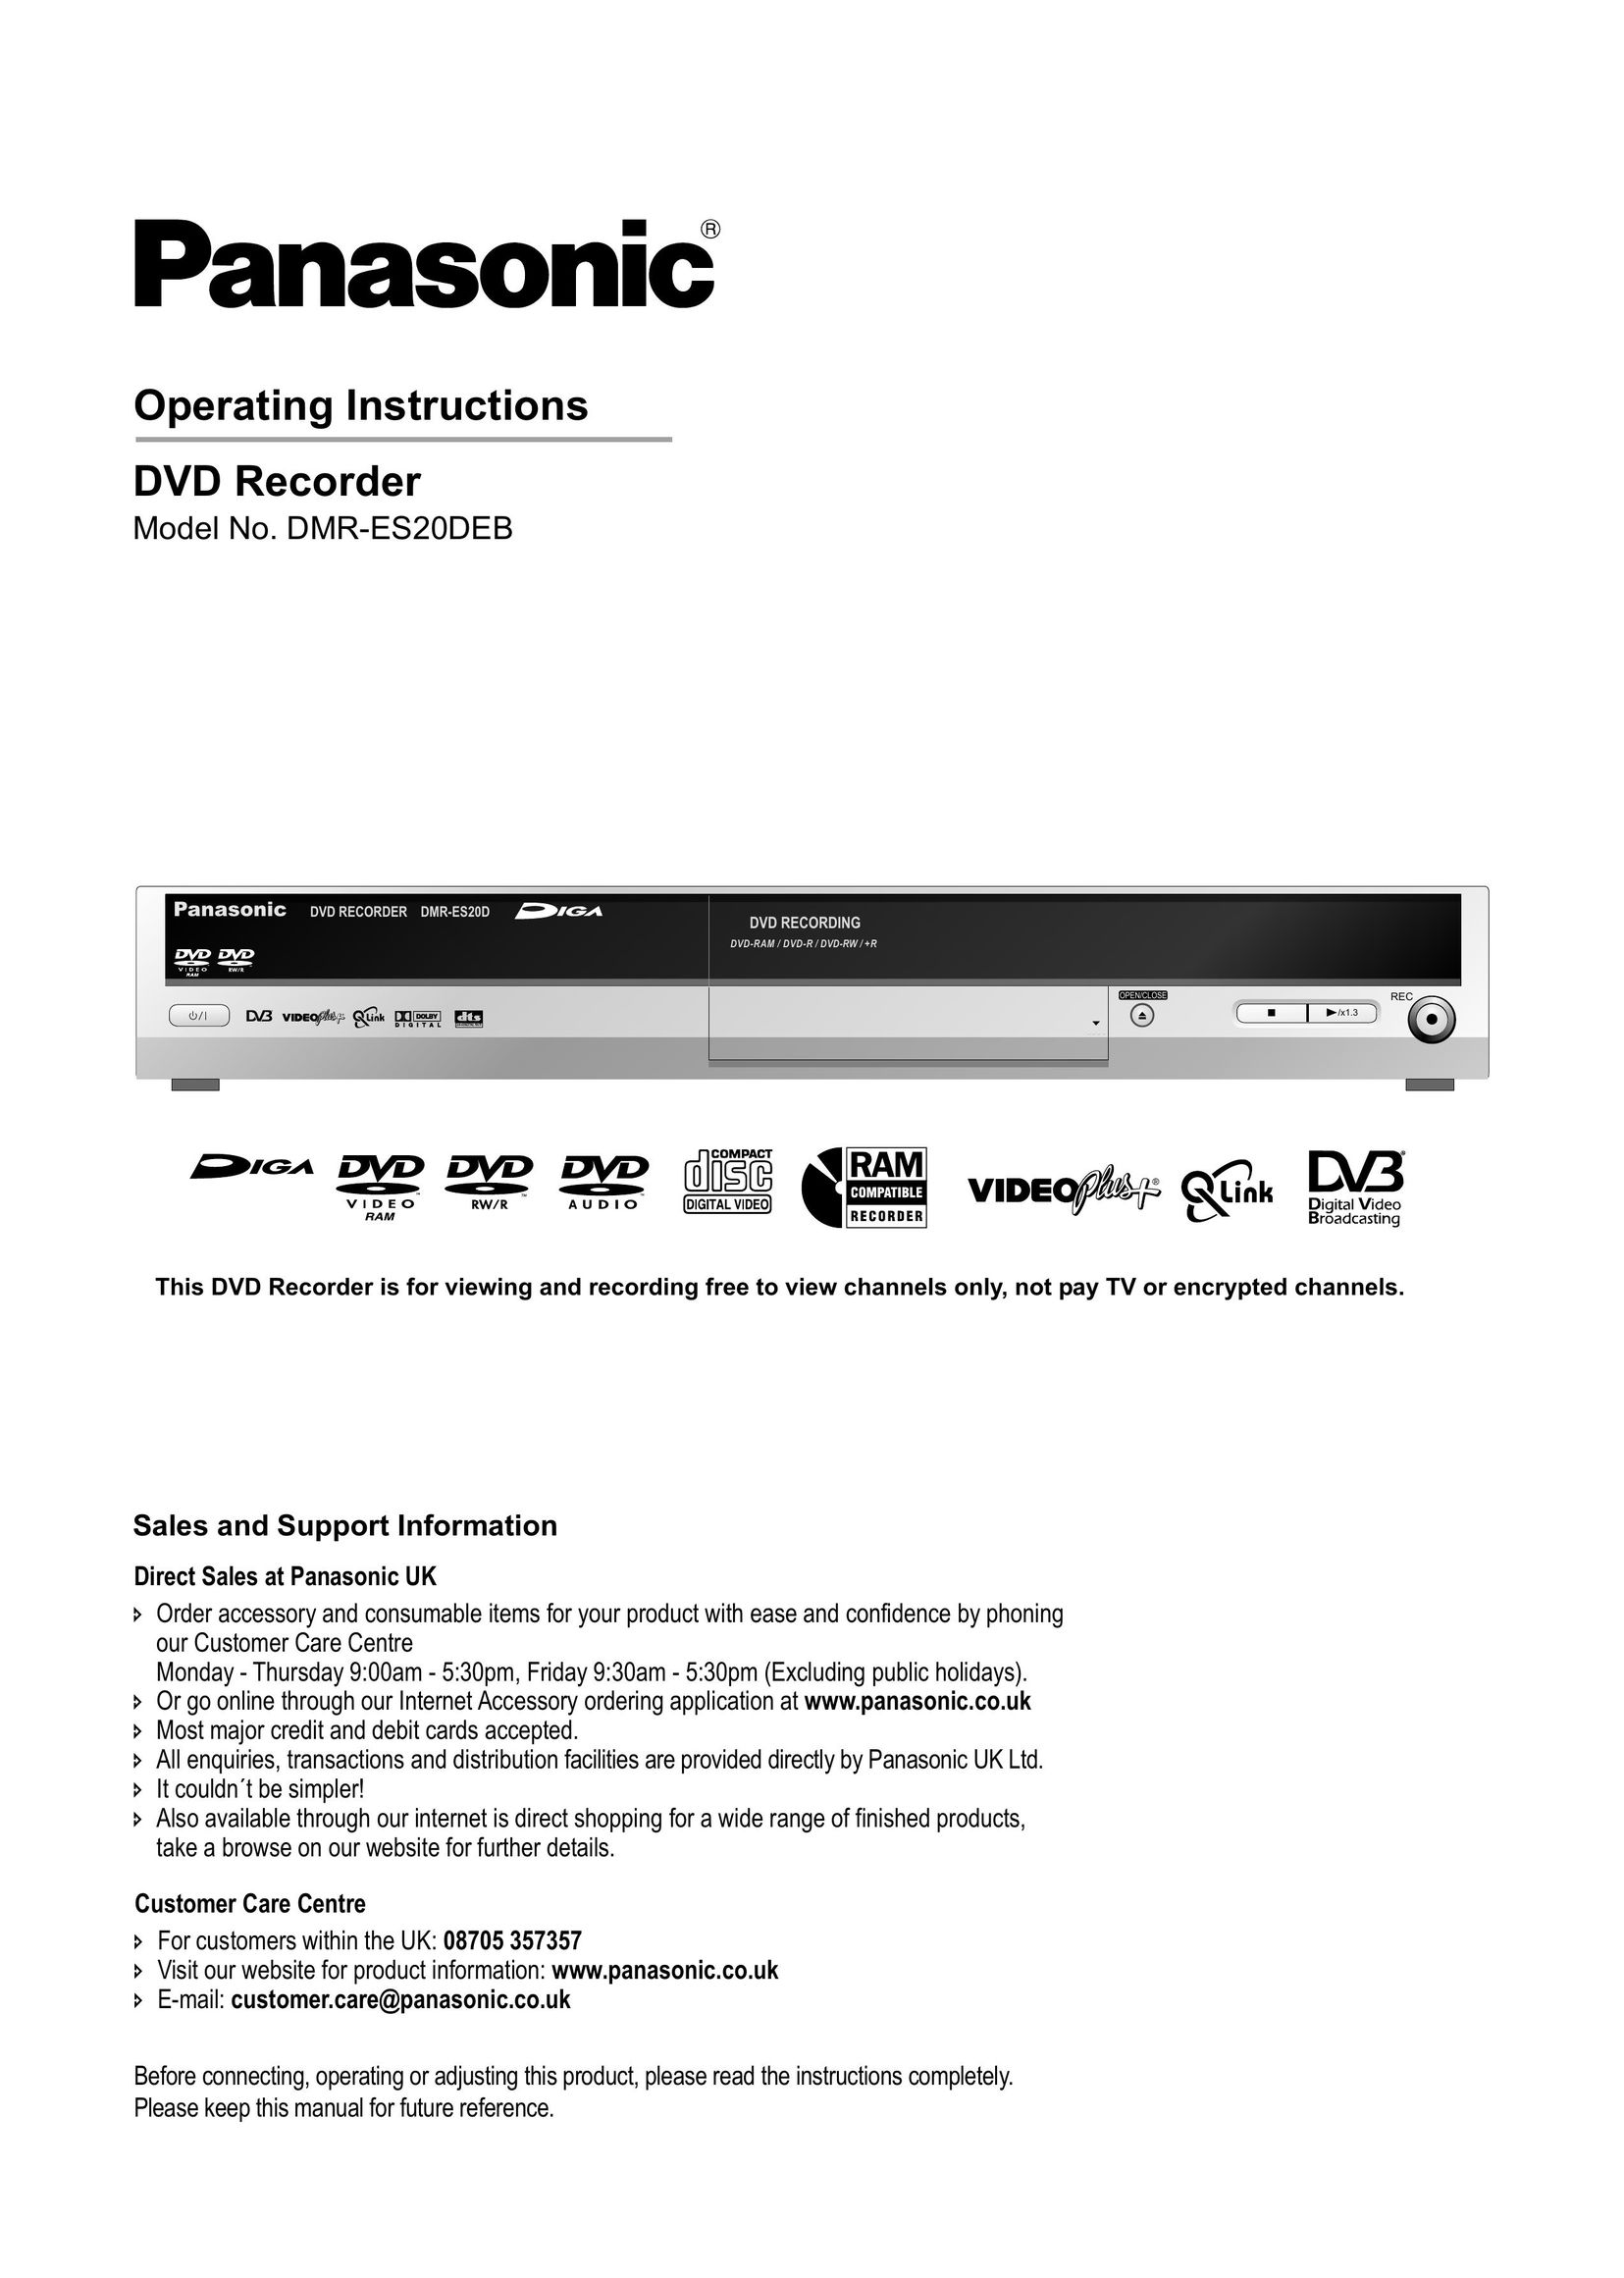 Panasonic DMR-ES20DEB DVD Recorder User Manual